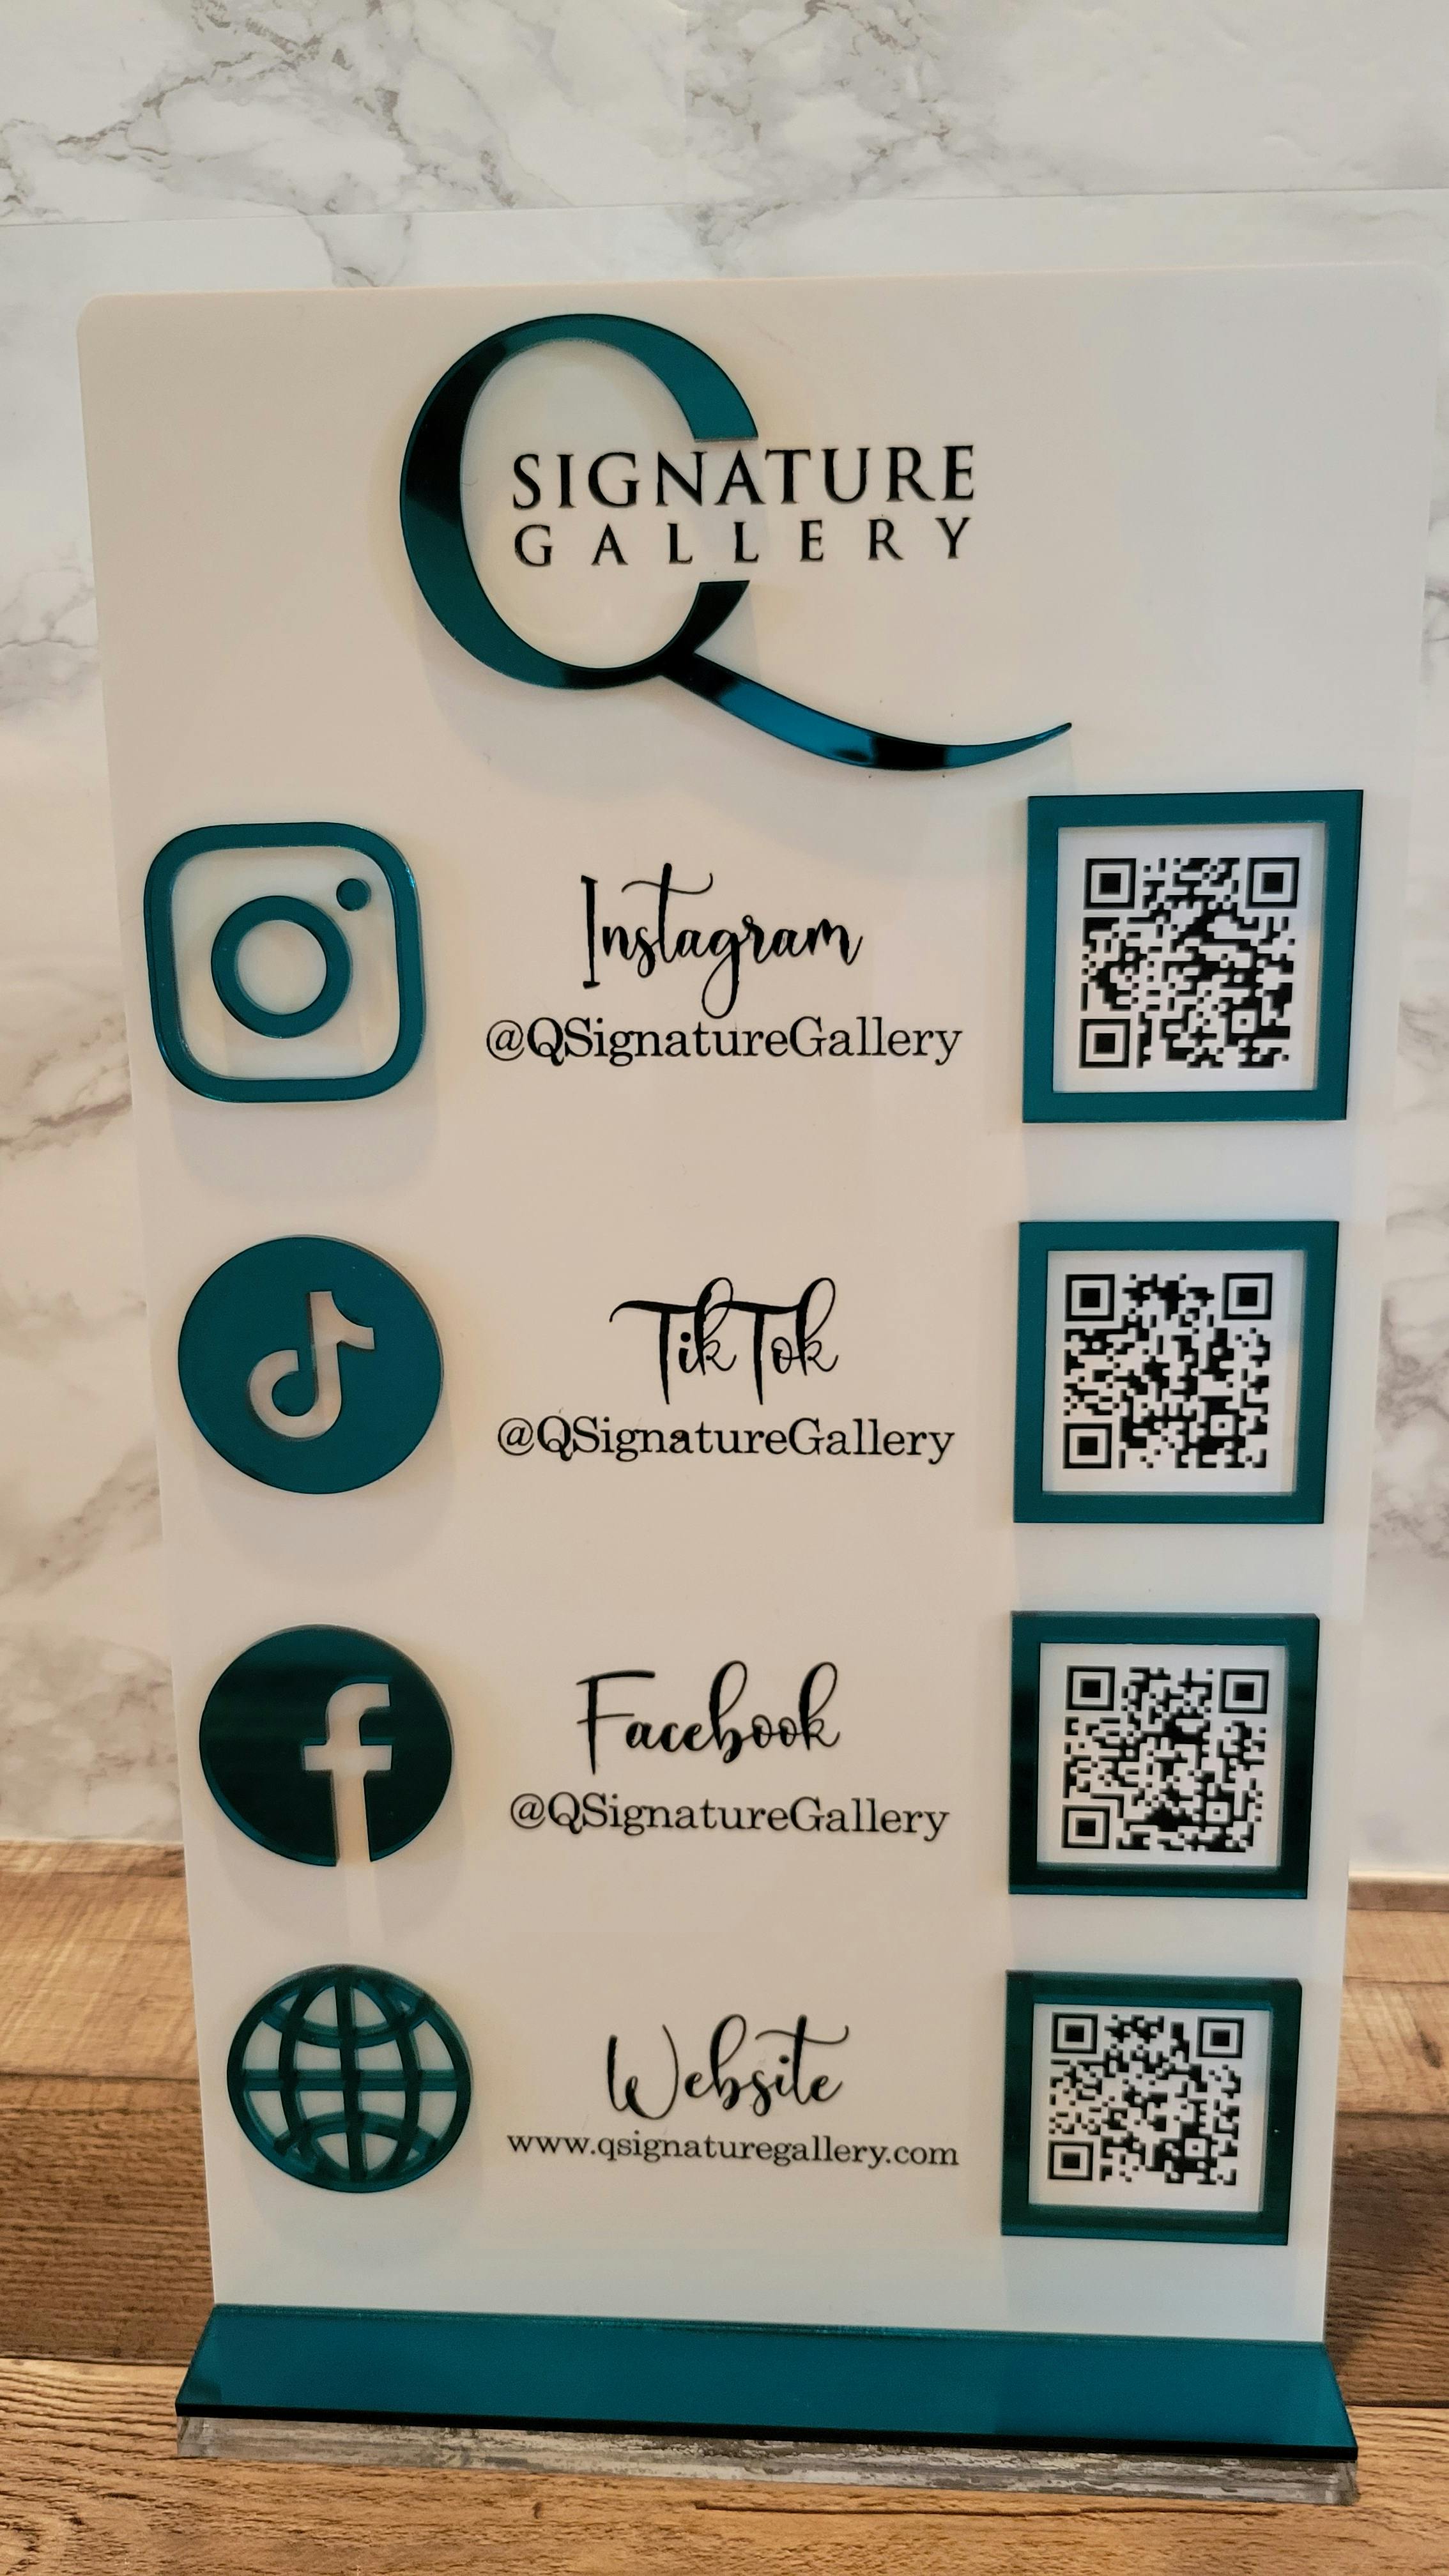 Acrylic Social Media Sign with QR codes